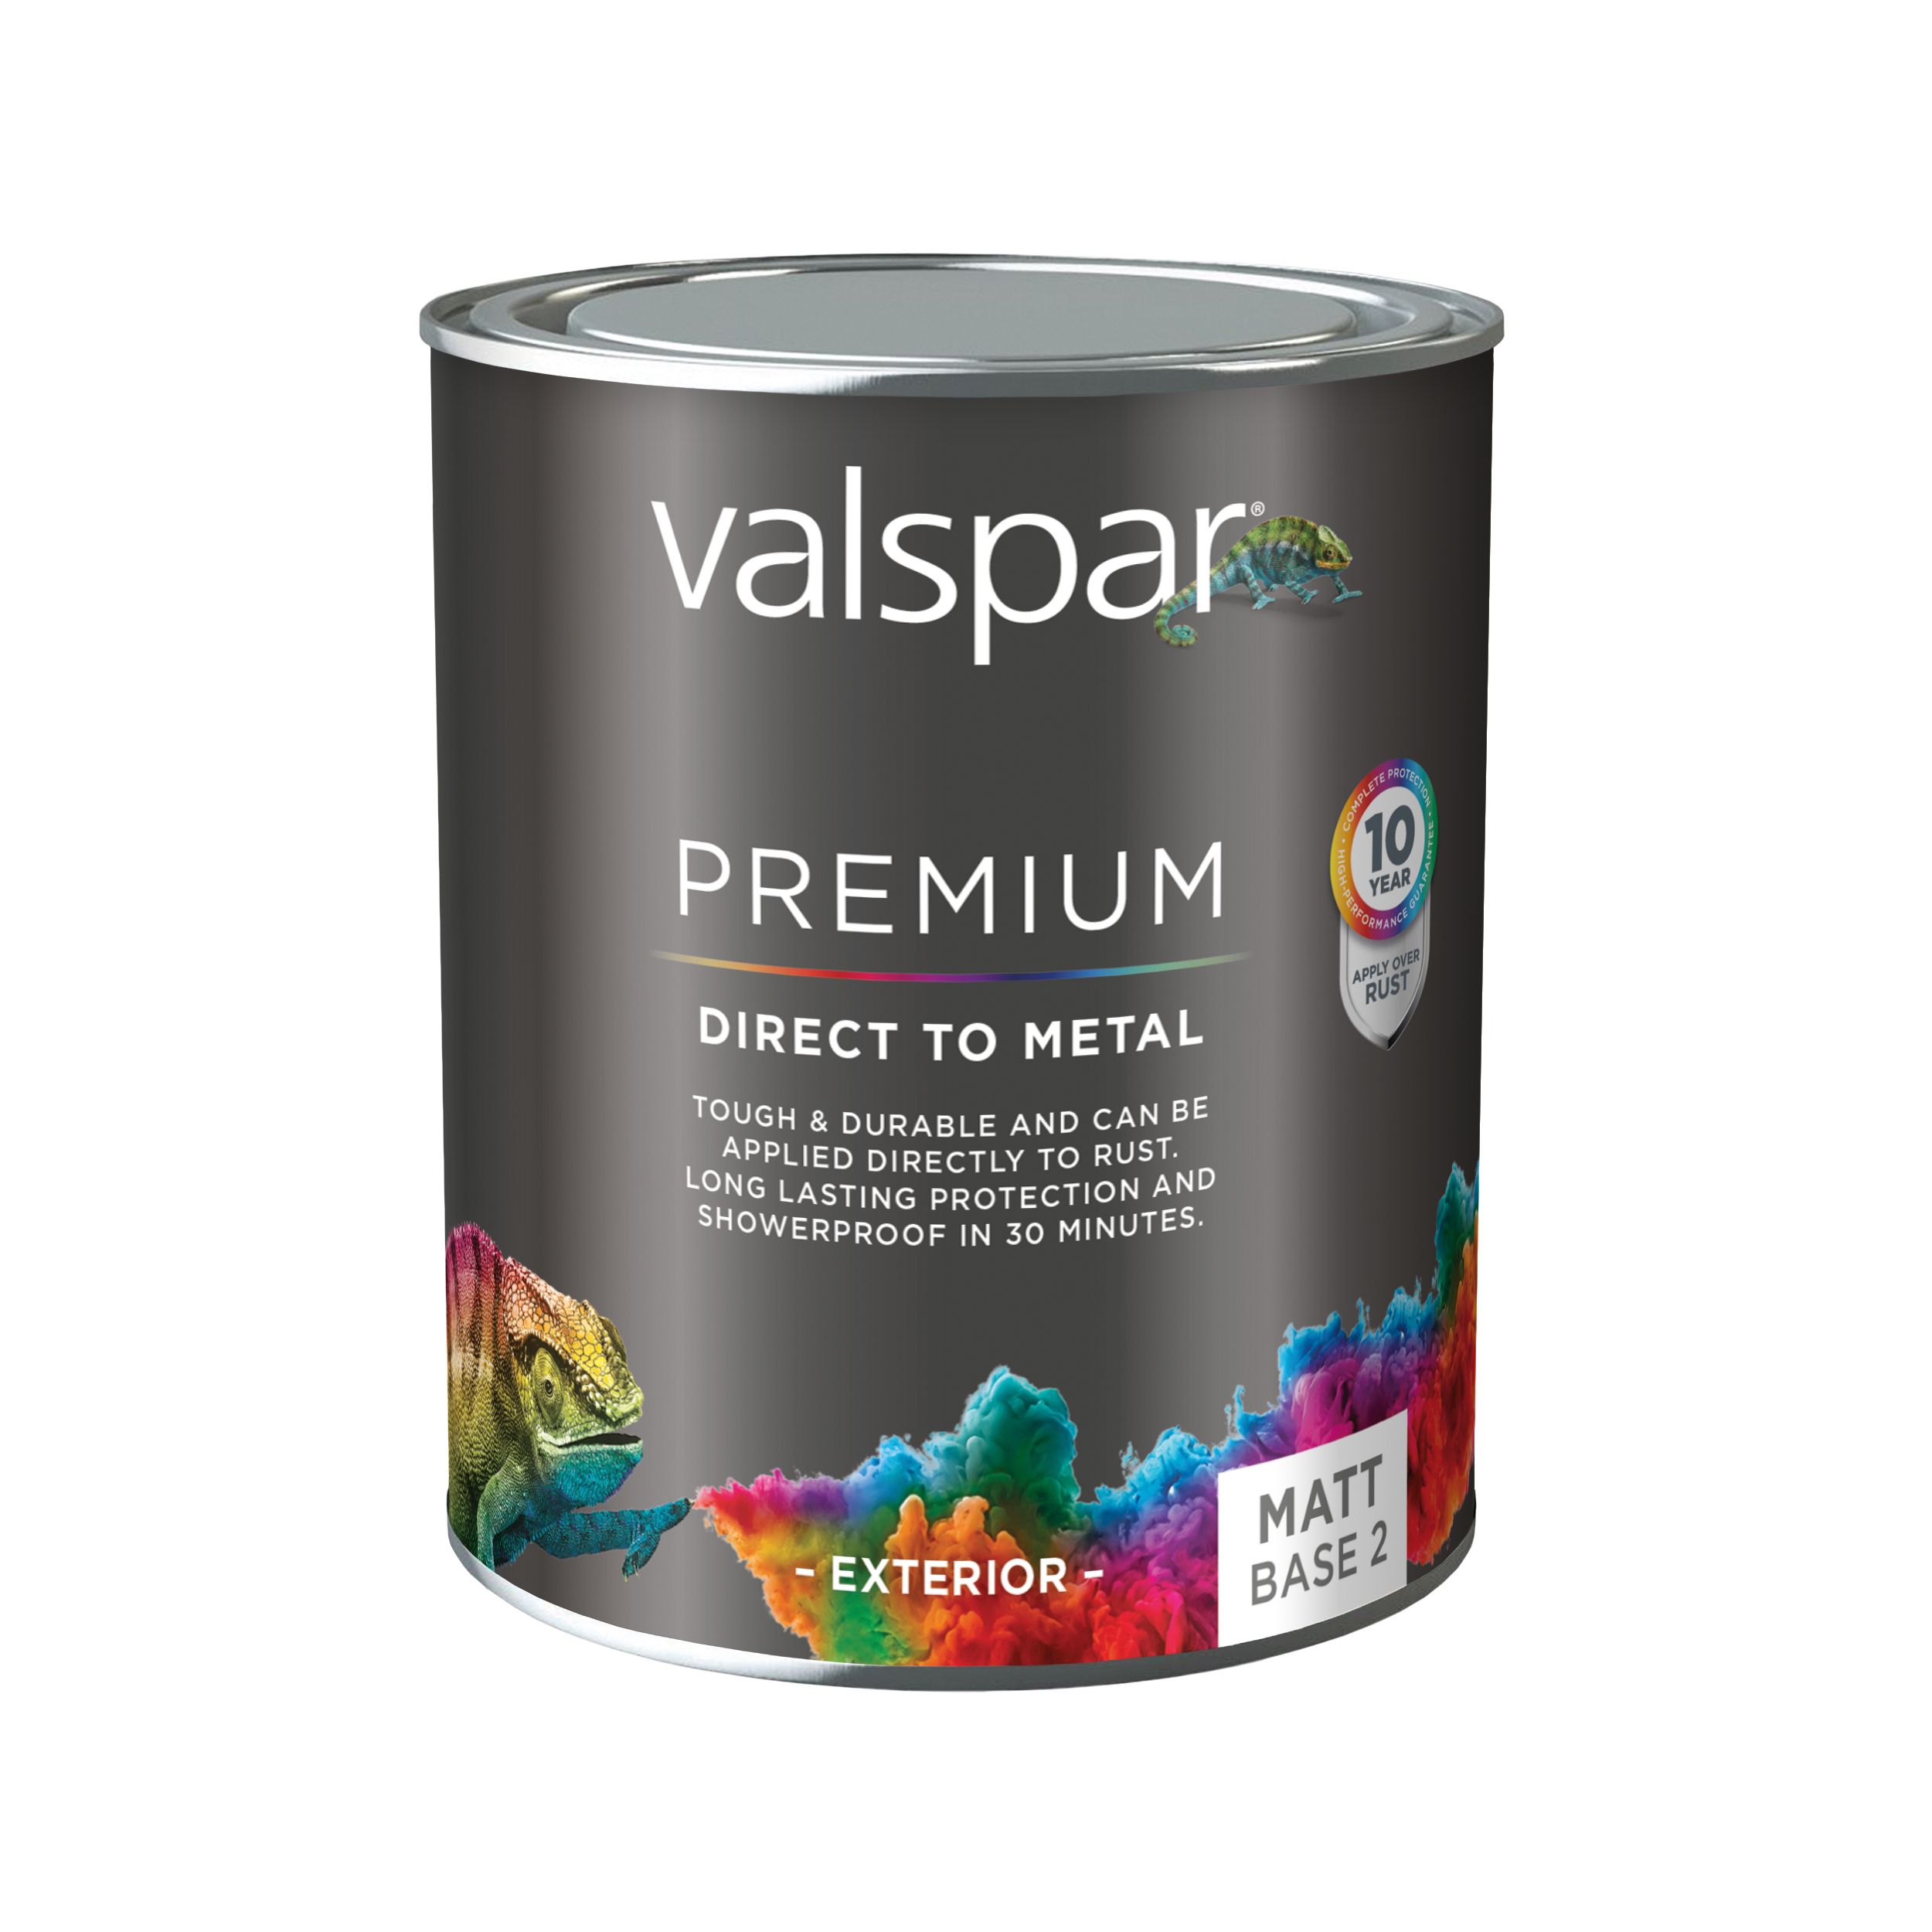 Valspar Premium Direct to Metal Exterior Metal & wood Matt Basecoat, Mixed, Base B, 750ml